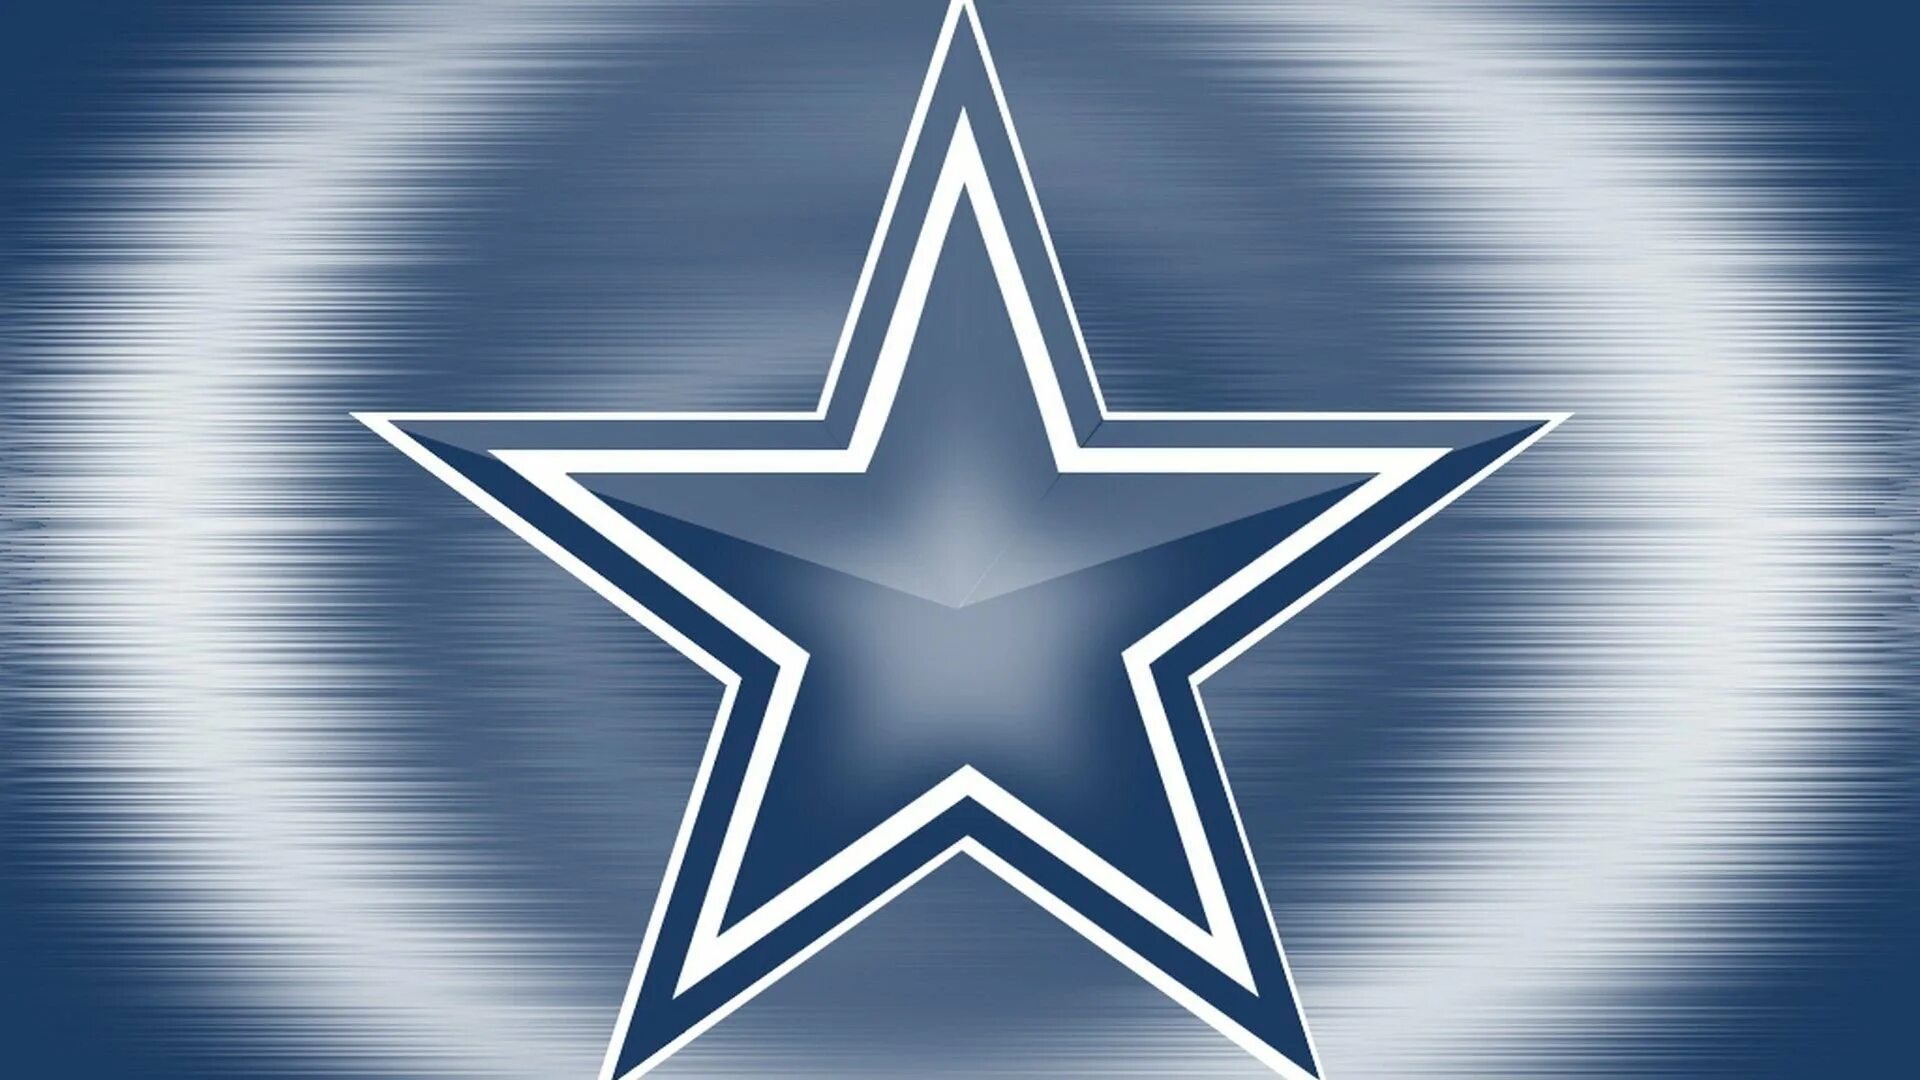 Dallas Cowboys. Лого звезда Даллас ковбойз. Dallas Cowboys logo. Звезда фирменный знак.